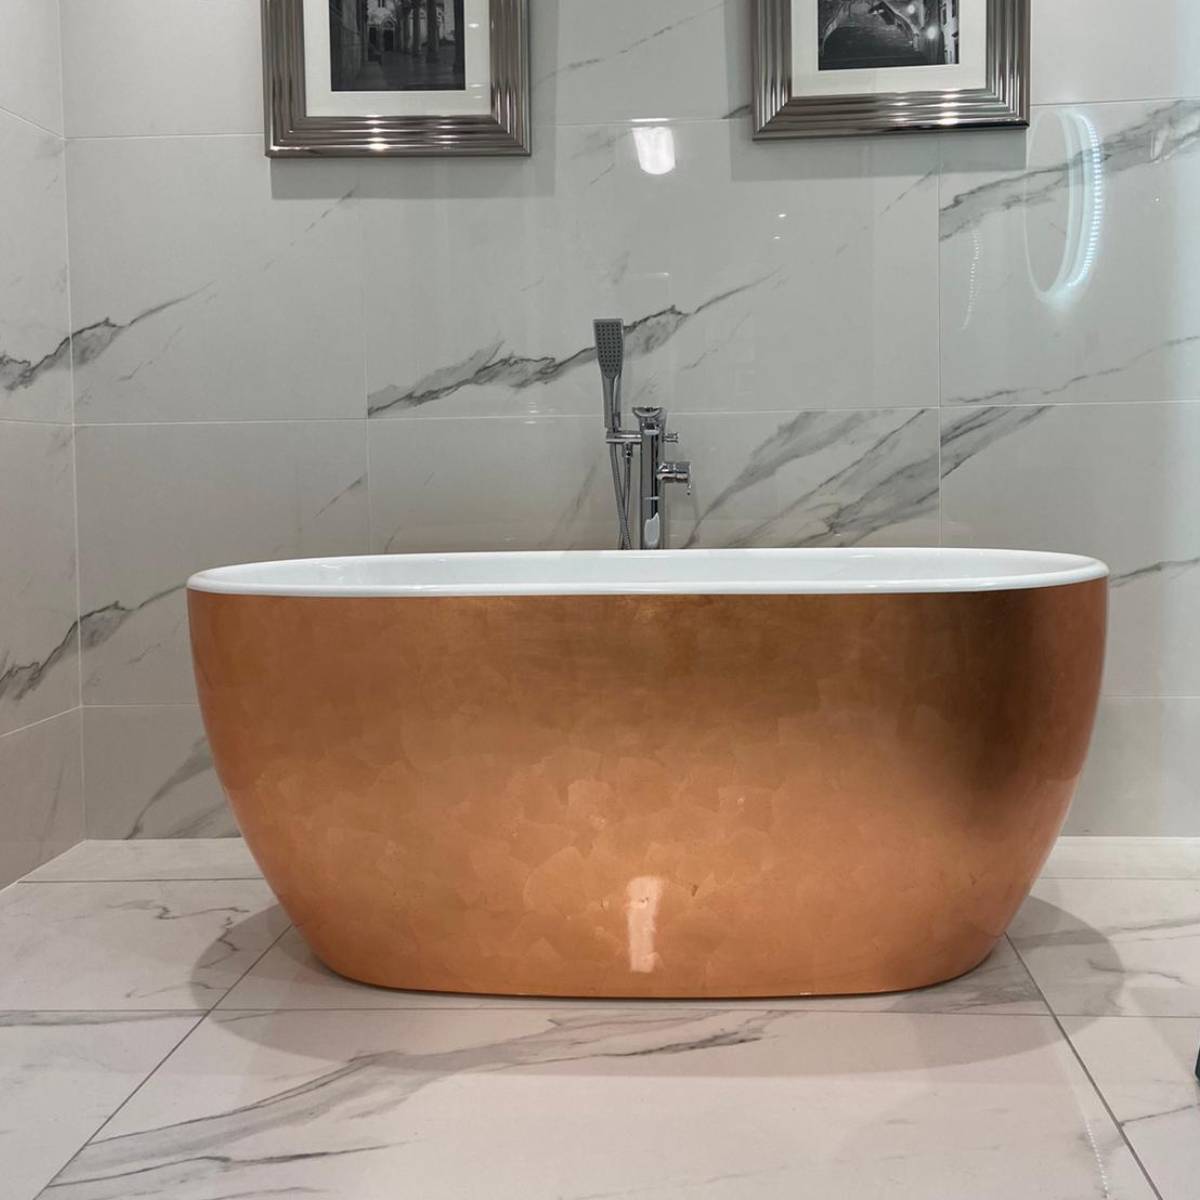 Cannes 1500mm Luxury Freestanding Bath - Copper Leaf Finish (10999)